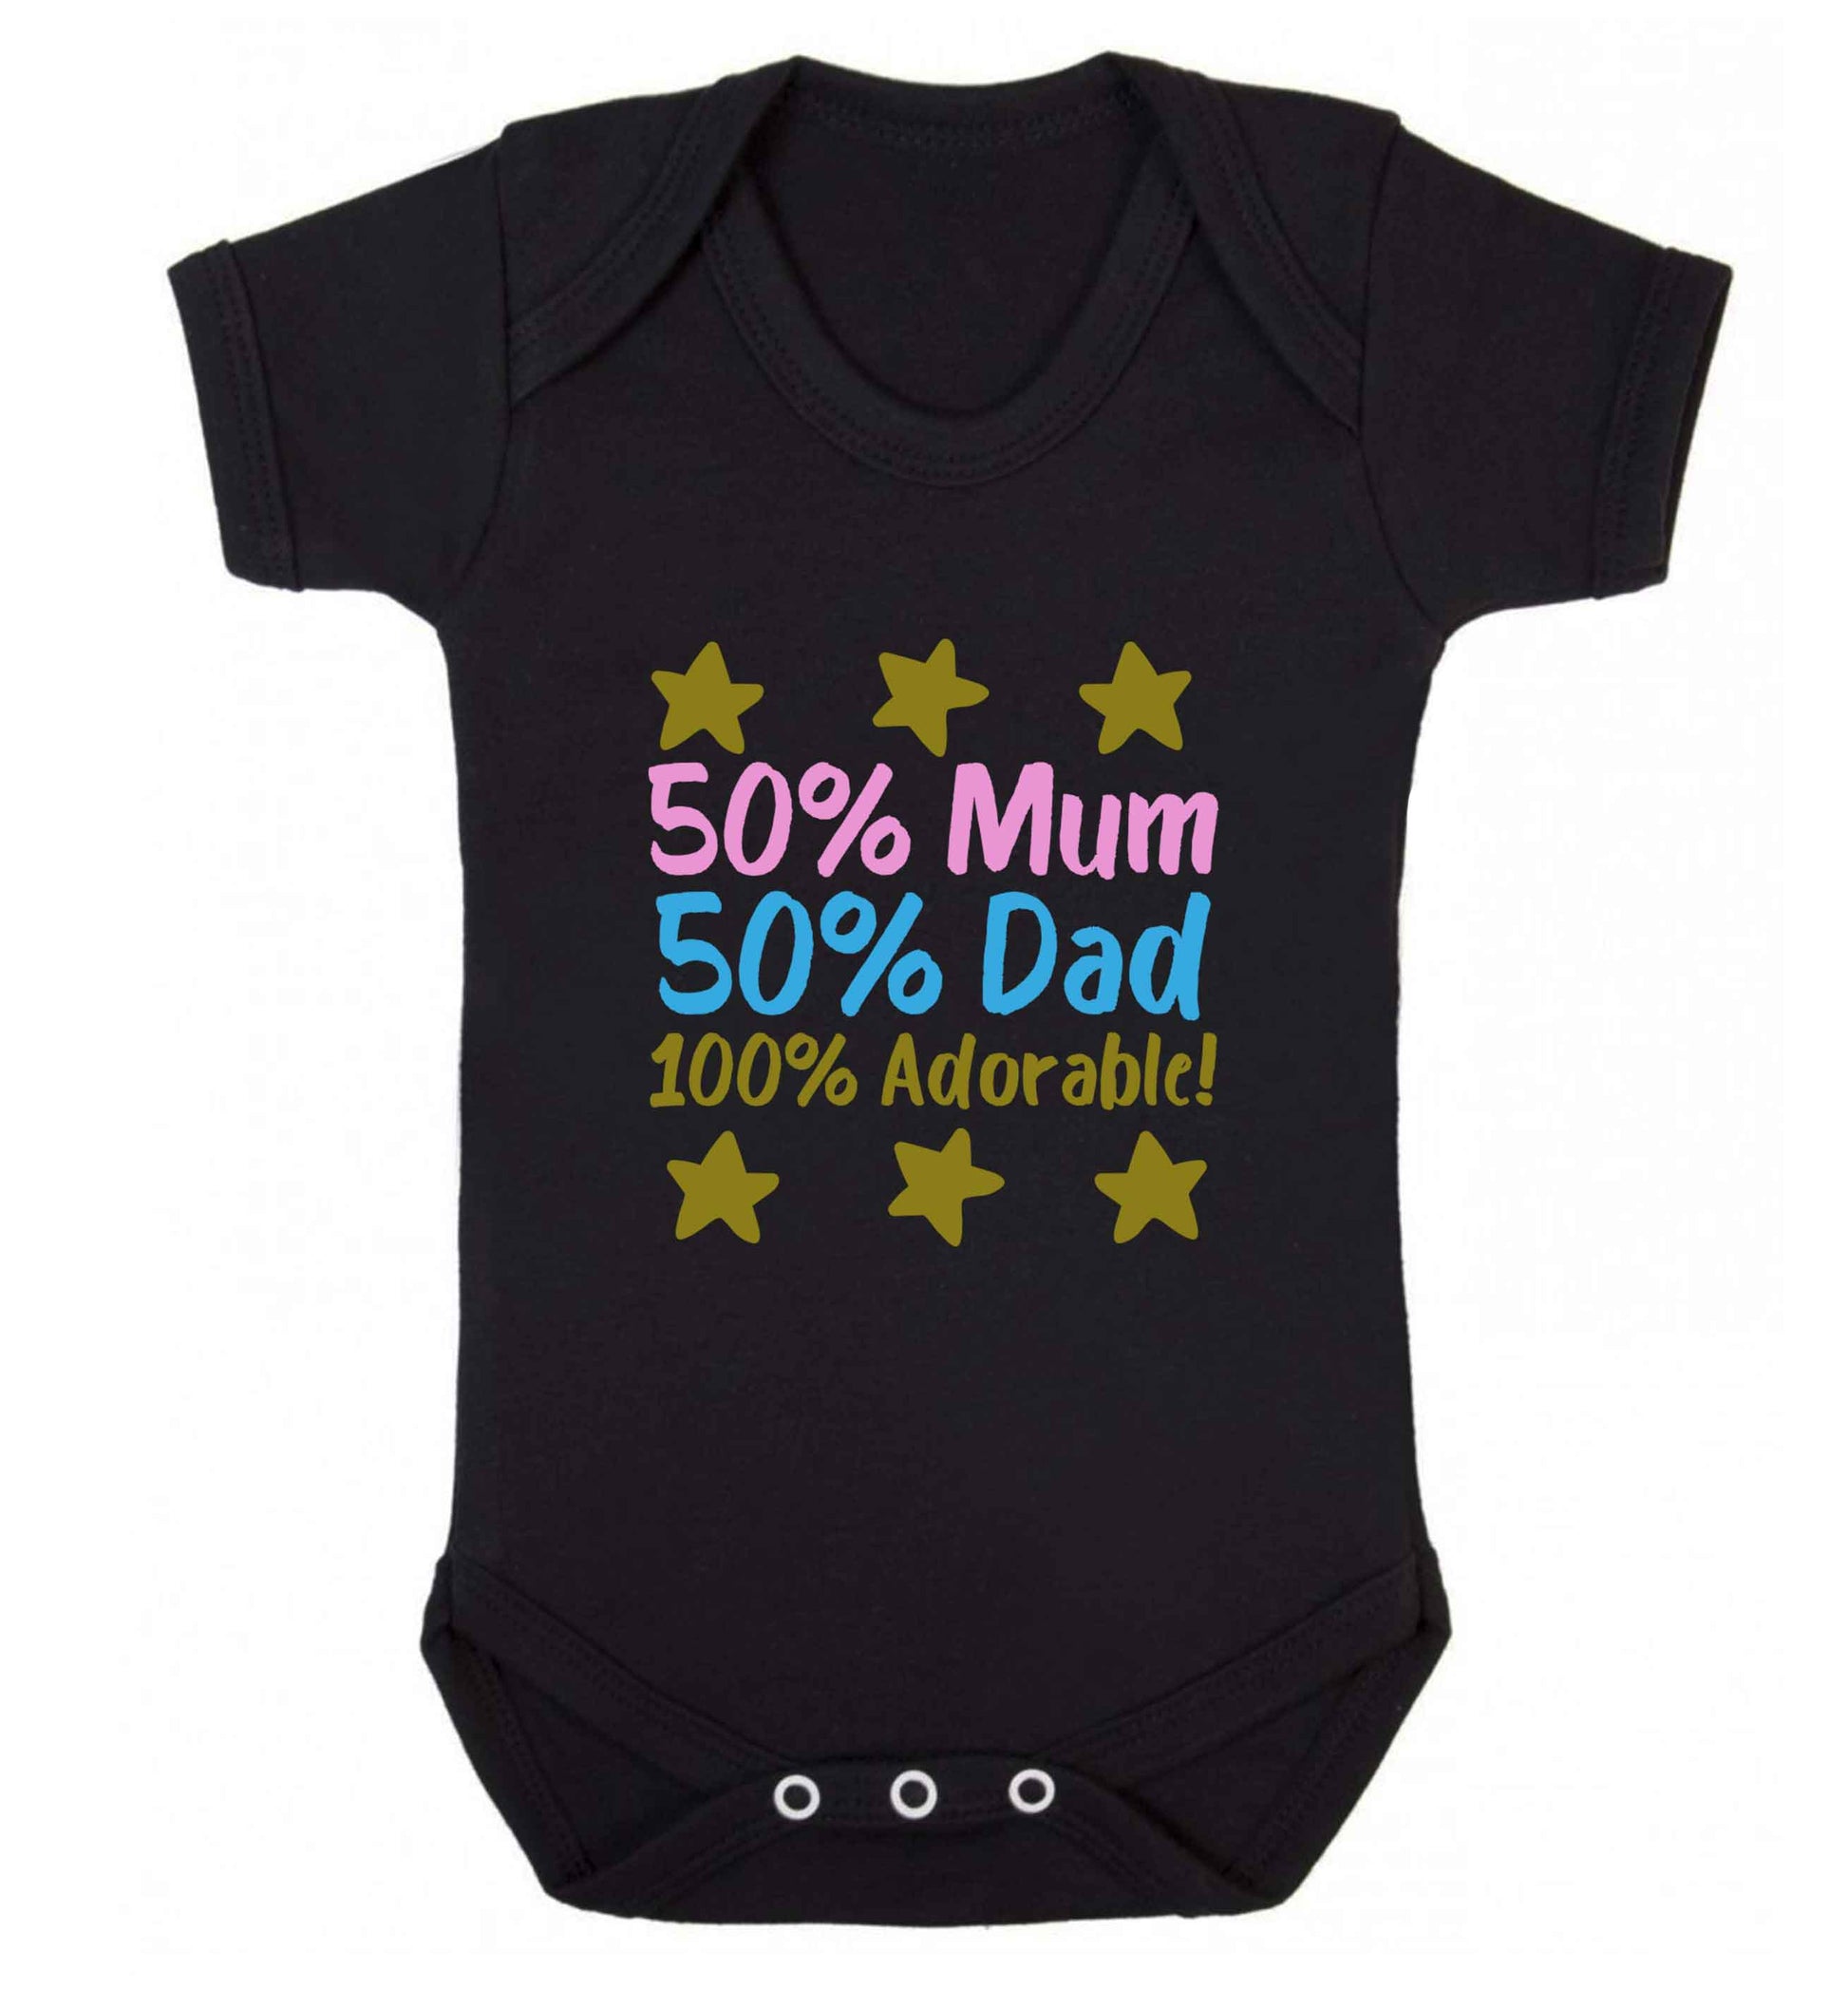 50% mum 50% dad 100% adorable baby vest black 18-24 months